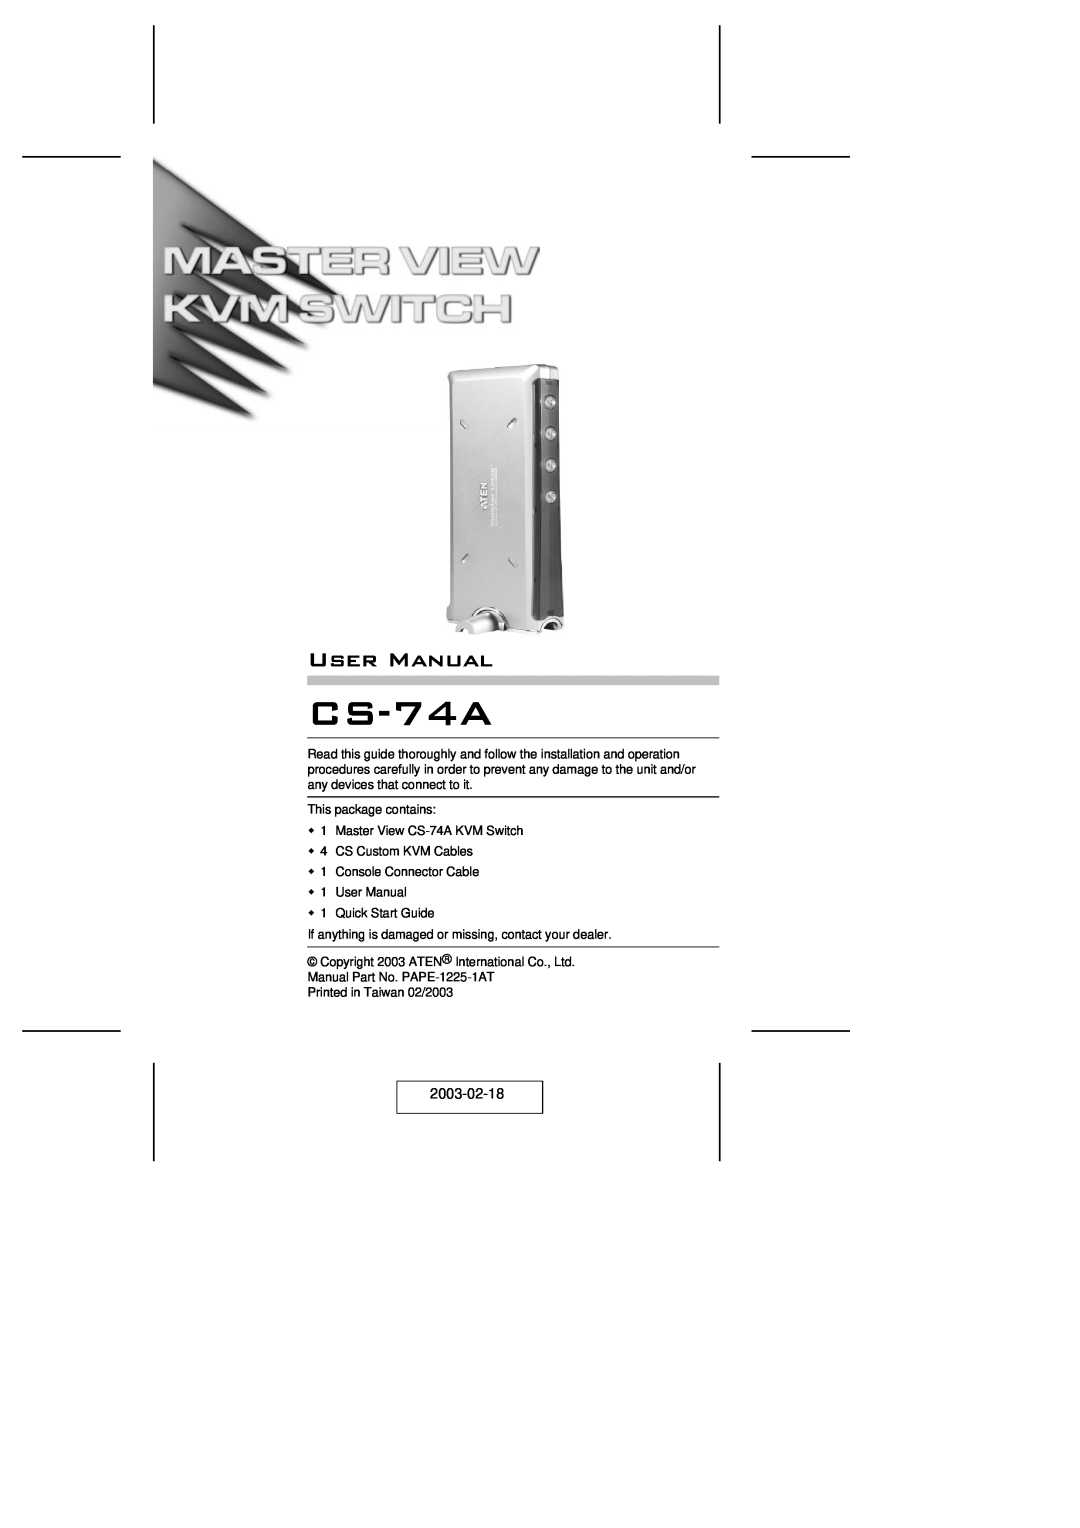 ATEN Technology CS-74A user manual User Manual, 2003-02-18 